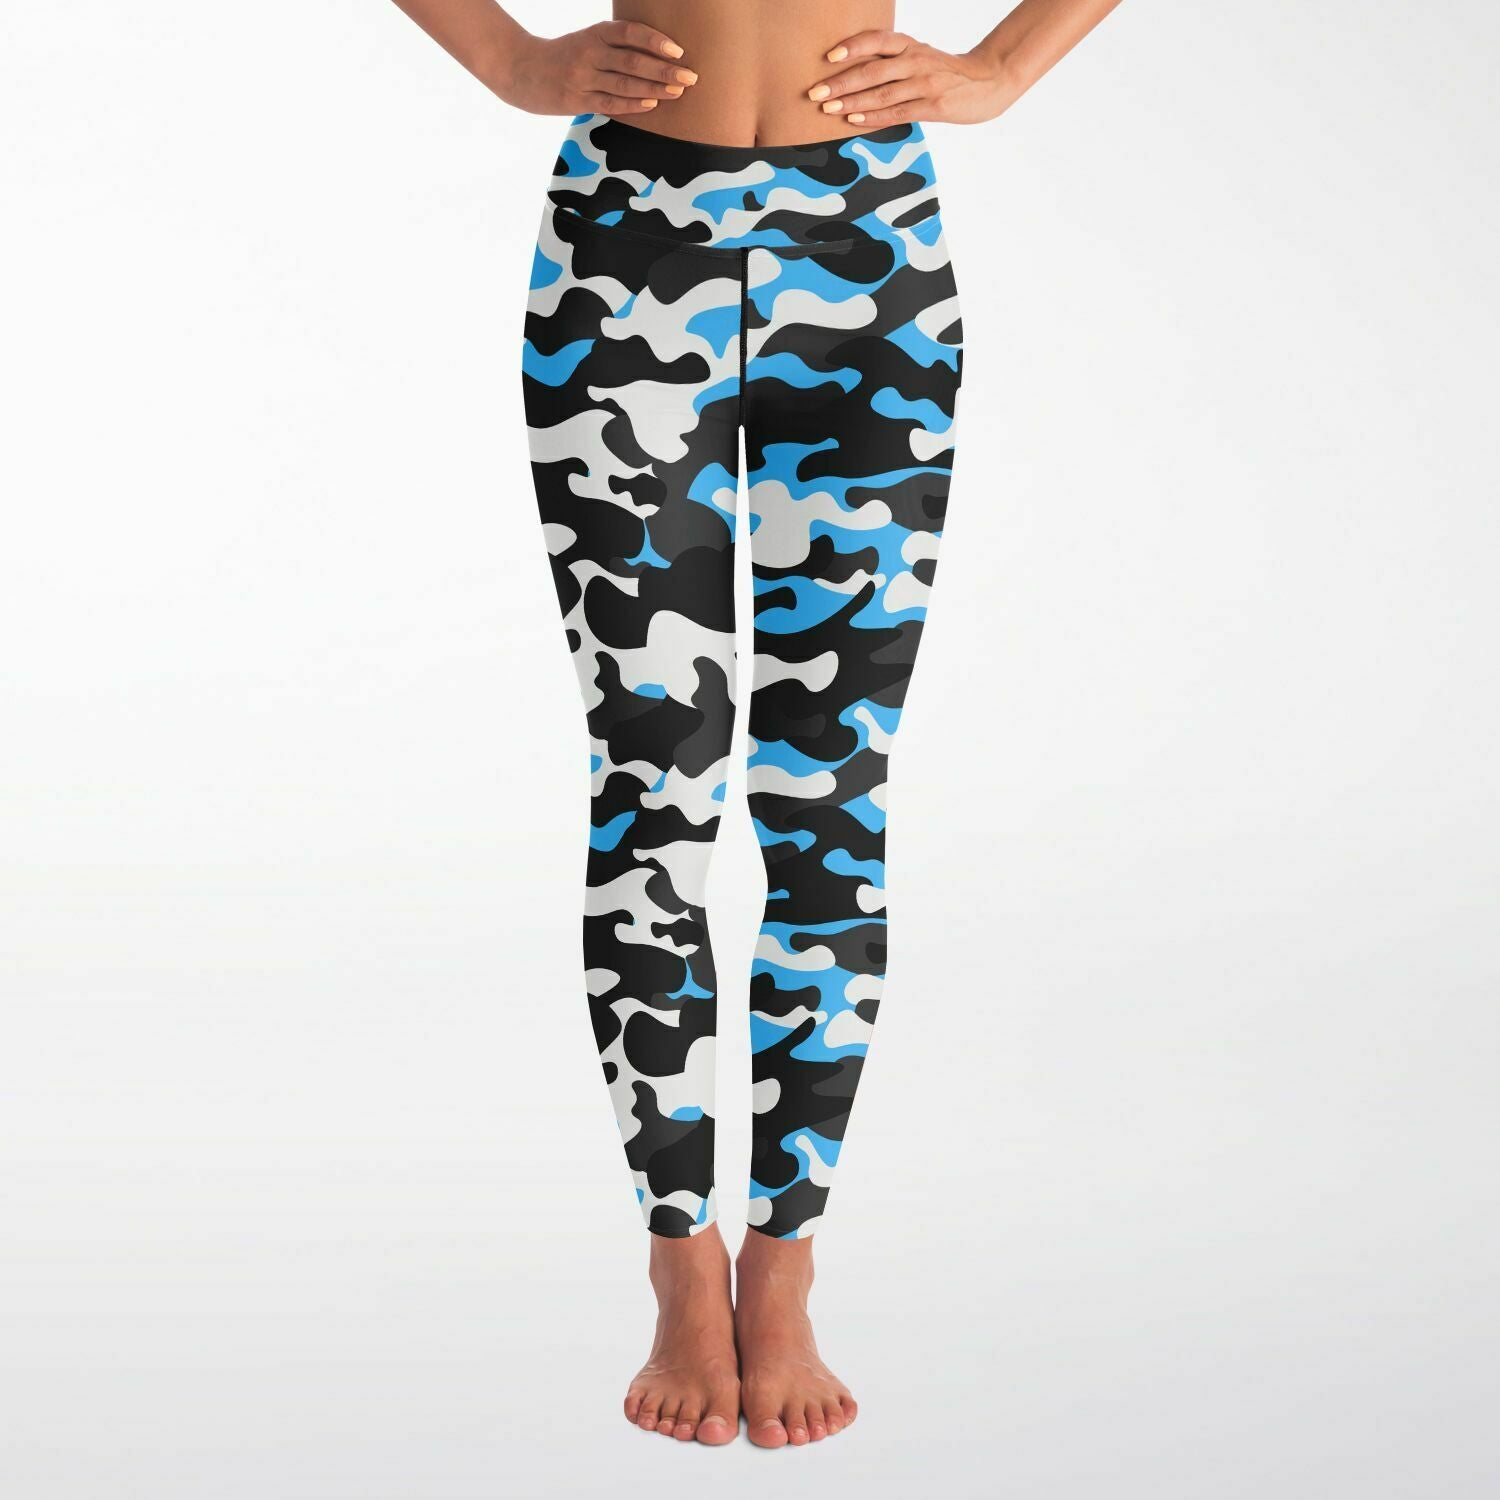 Women's Urban Jungle Carolina Blue White Black Camouflage High-waisted Yoga Leggings